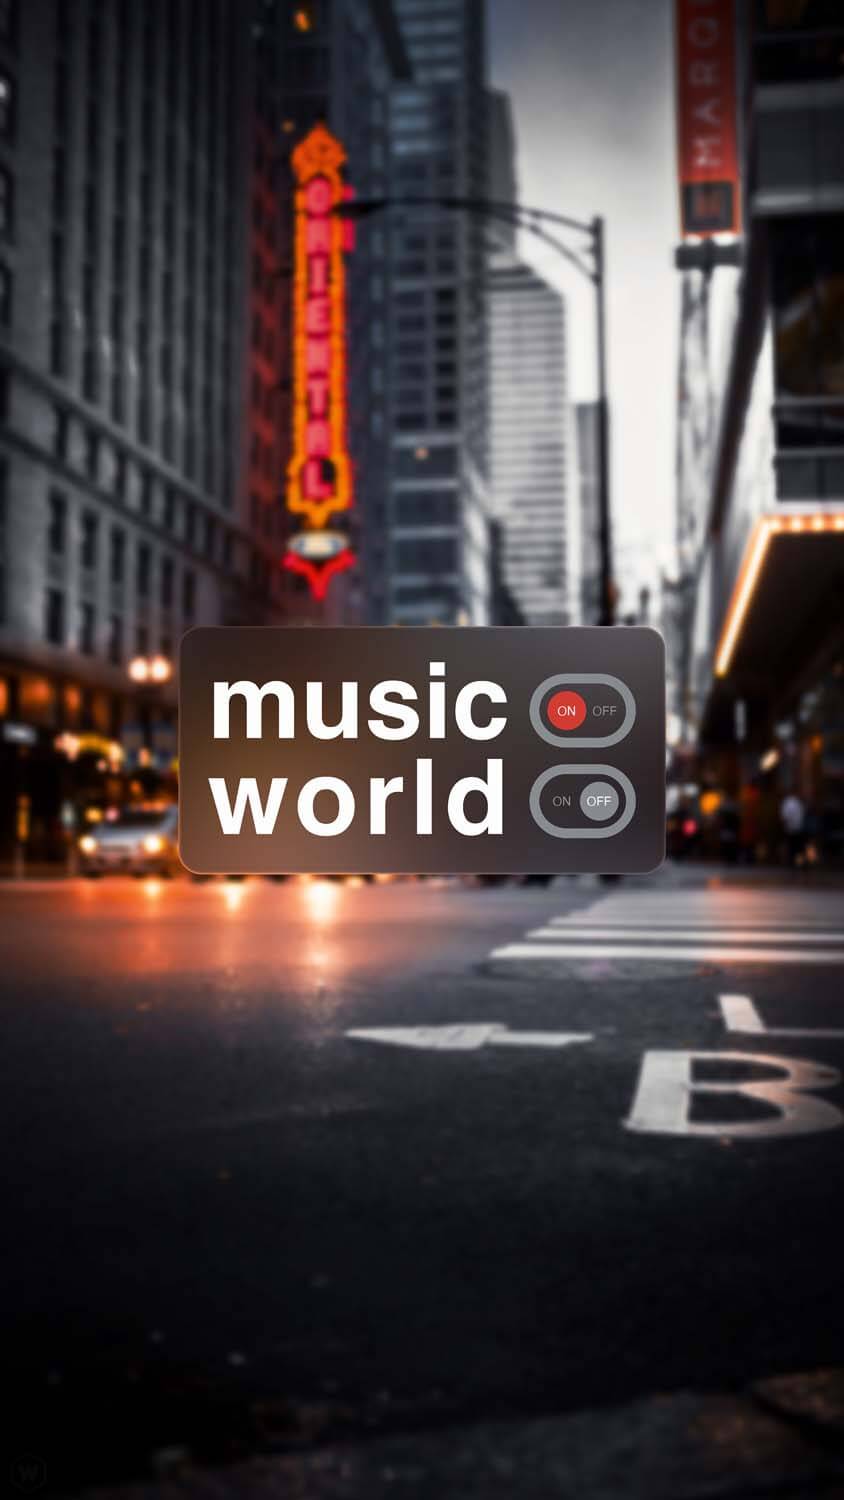 Music ON World OFF iPhone Wallpaper HD